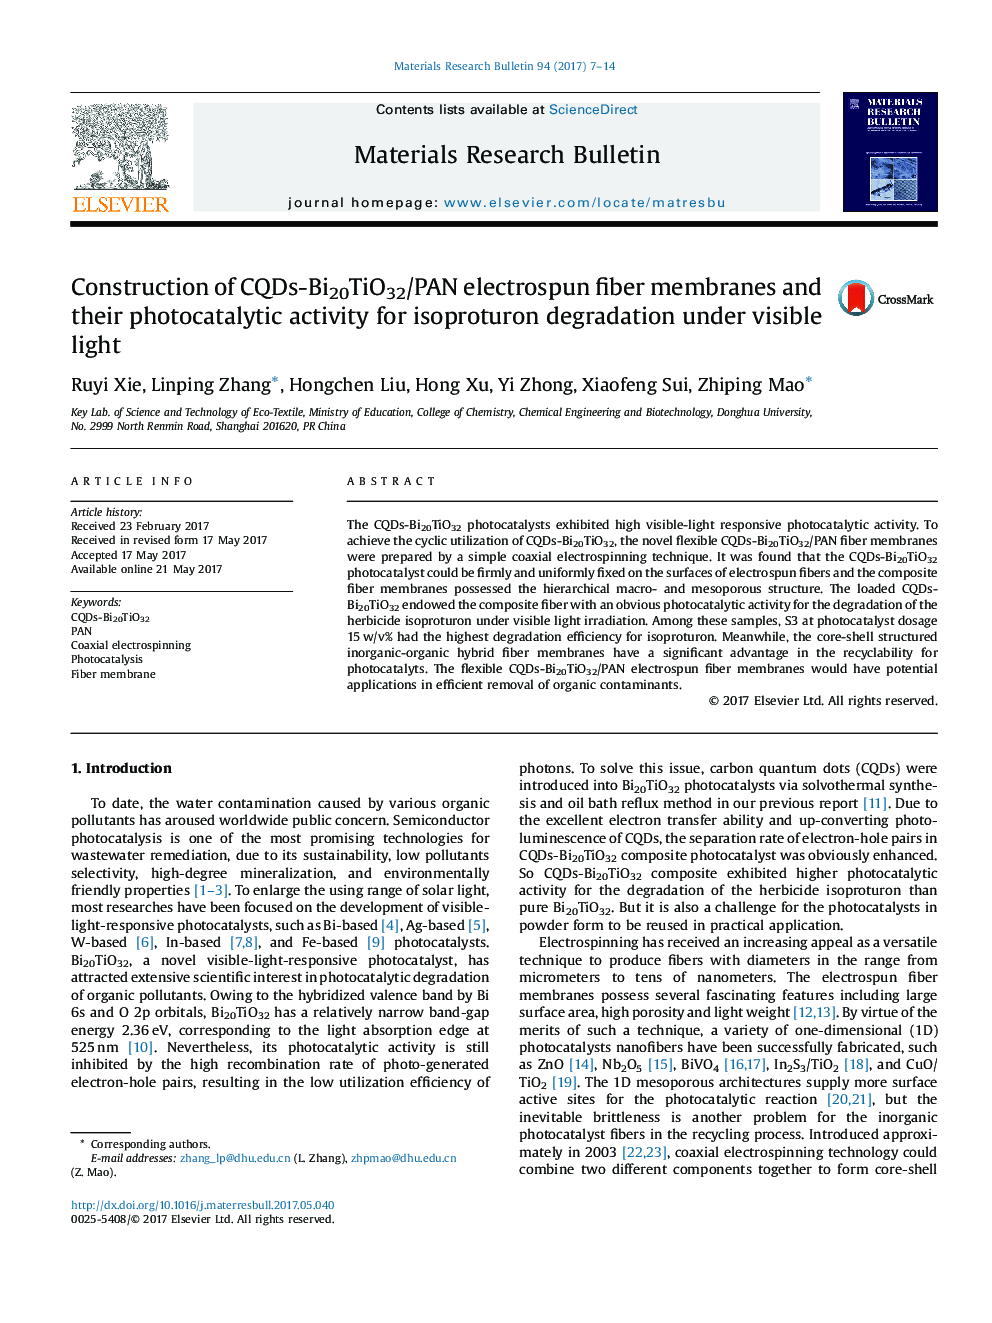 Construction of CQDs-Bi20TiO32/PAN electrospun fiber membranes and their photocatalytic activity for isoproturon degradation under visible light